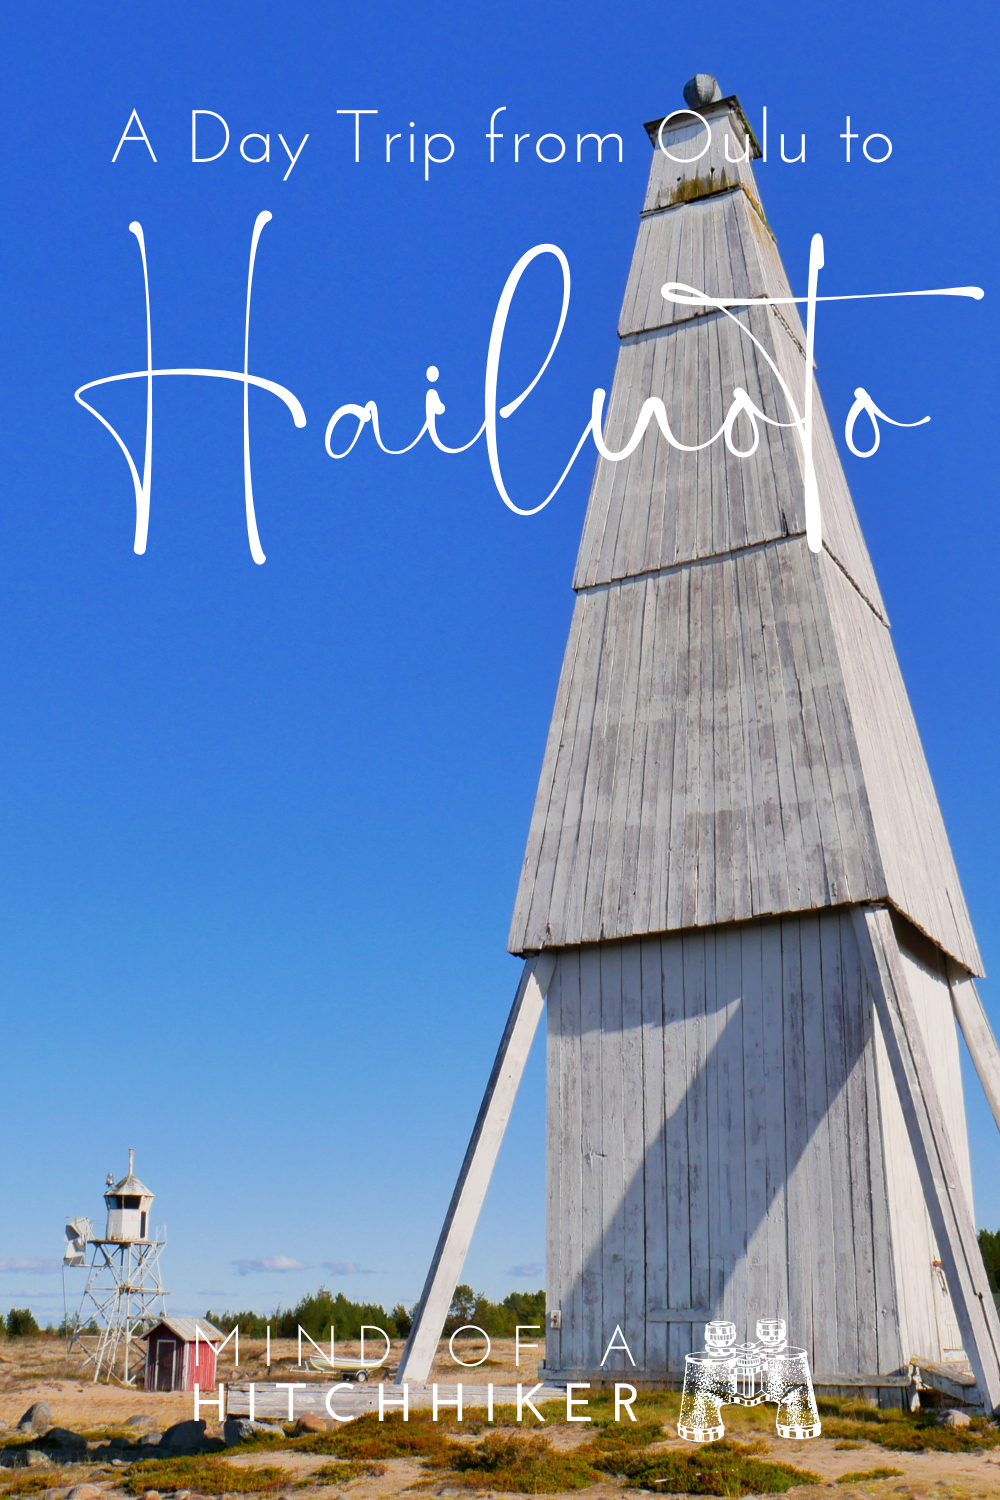 Day mark beacon tower Hailuoto Finland